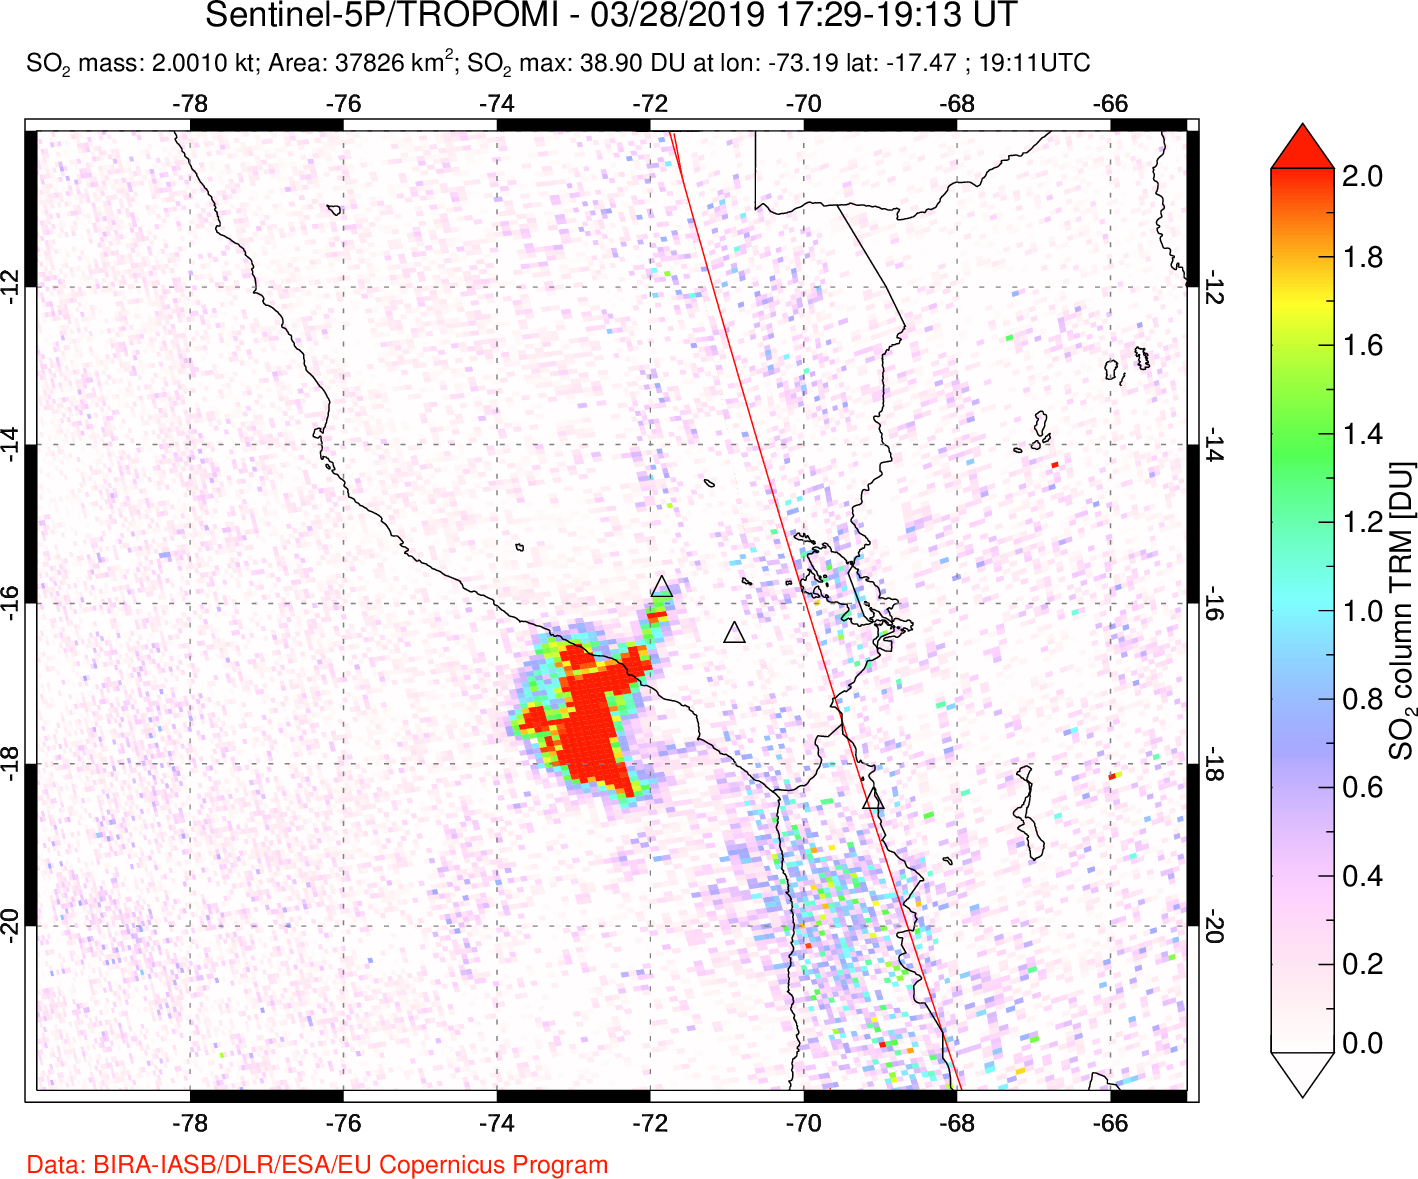 A sulfur dioxide image over Peru on Mar 28, 2019.